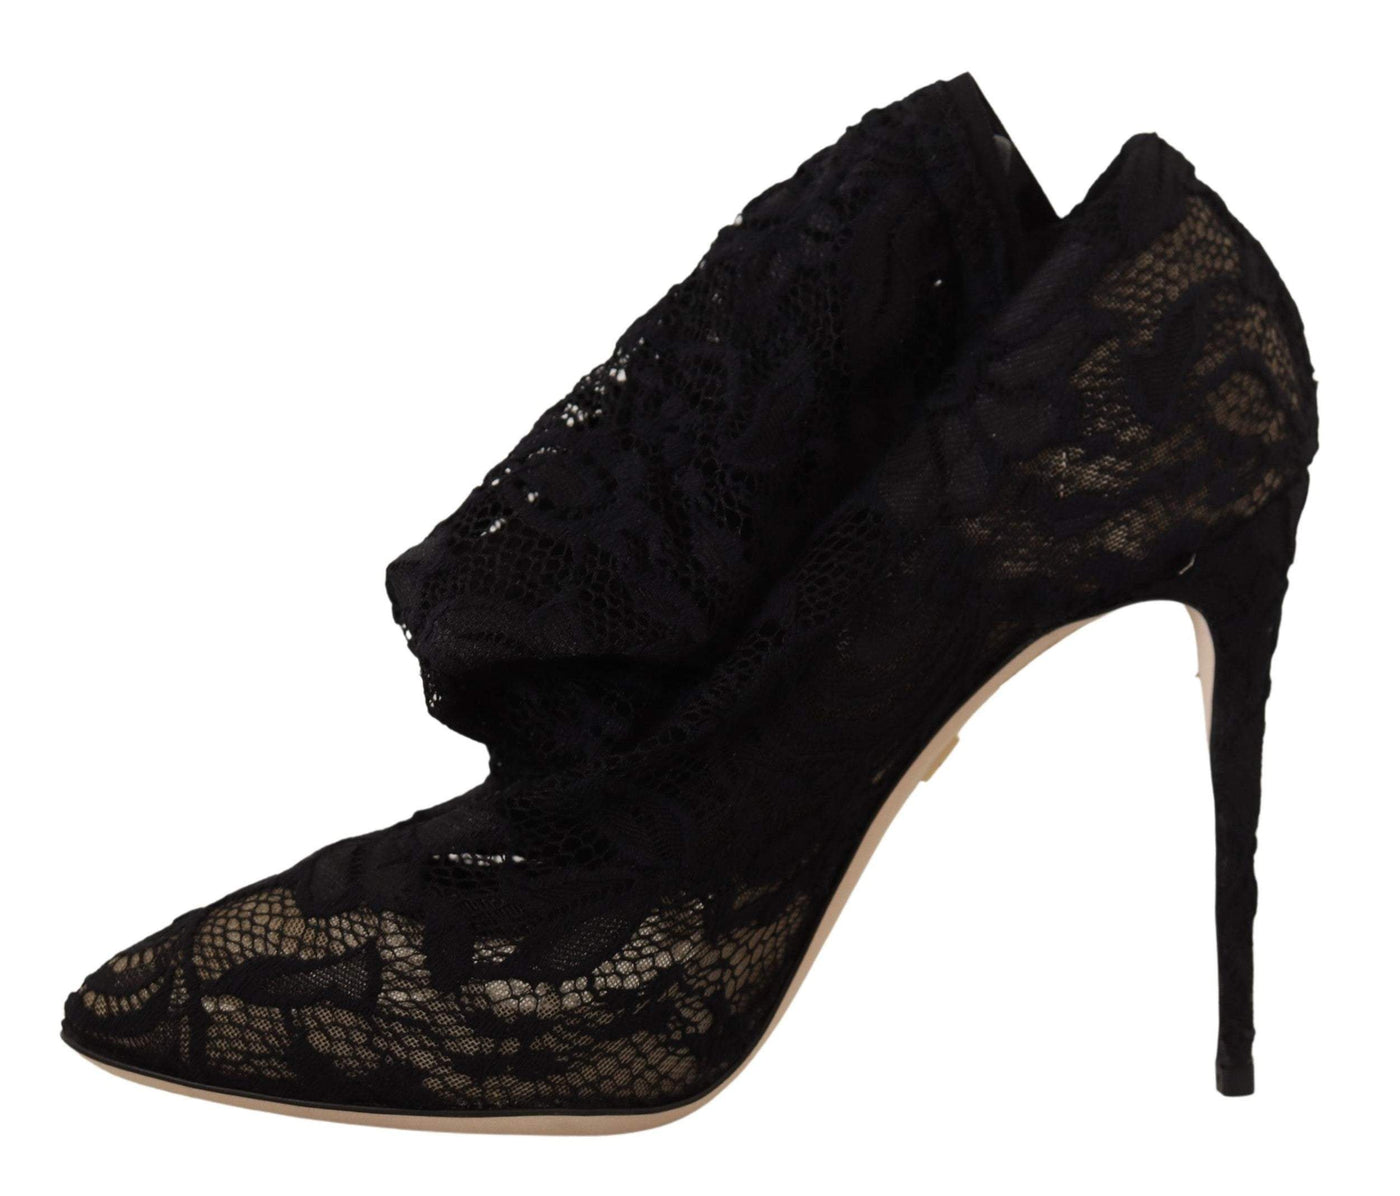 Dolce & Gabbana Black Stretch Socks Taormina Lace Boots Black, Boots - Women - Shoes, Dolce & Gabbana, EU36/US5.5, EU37.5/US7, EU37/US6.5, EU38/US7.5, EU39/US8.5, feed-1 at SEYMAYKA